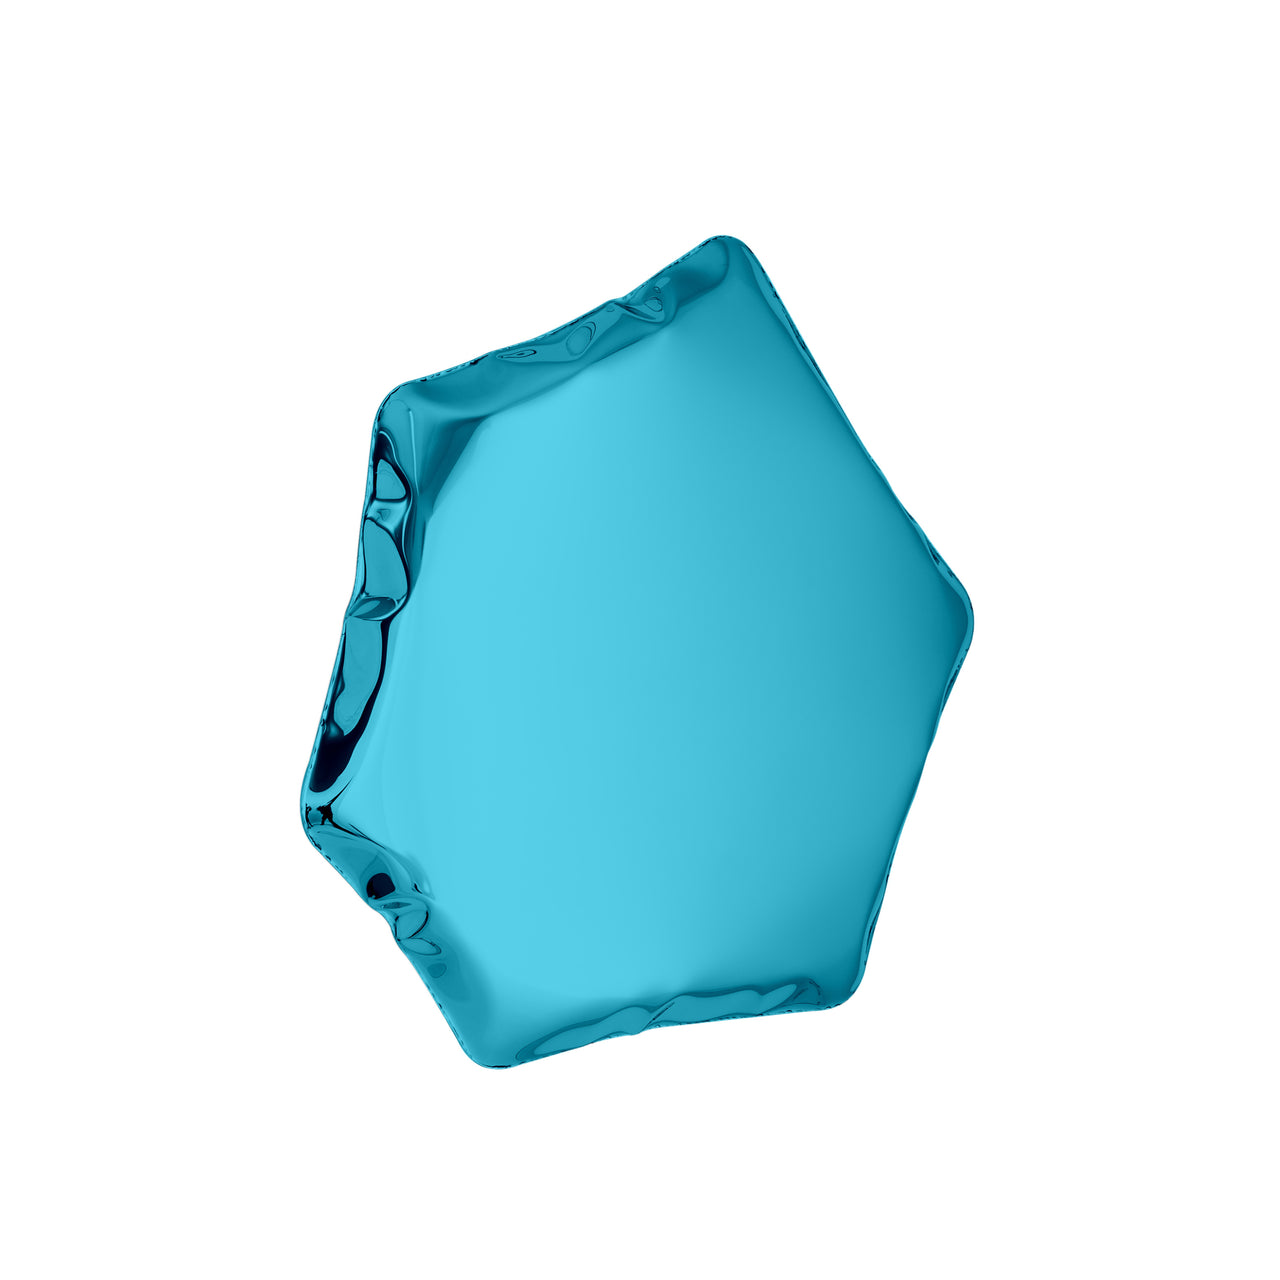 Tafla Polygonal Mirror Collection: Gradient + Mirror C6 + Sapphire